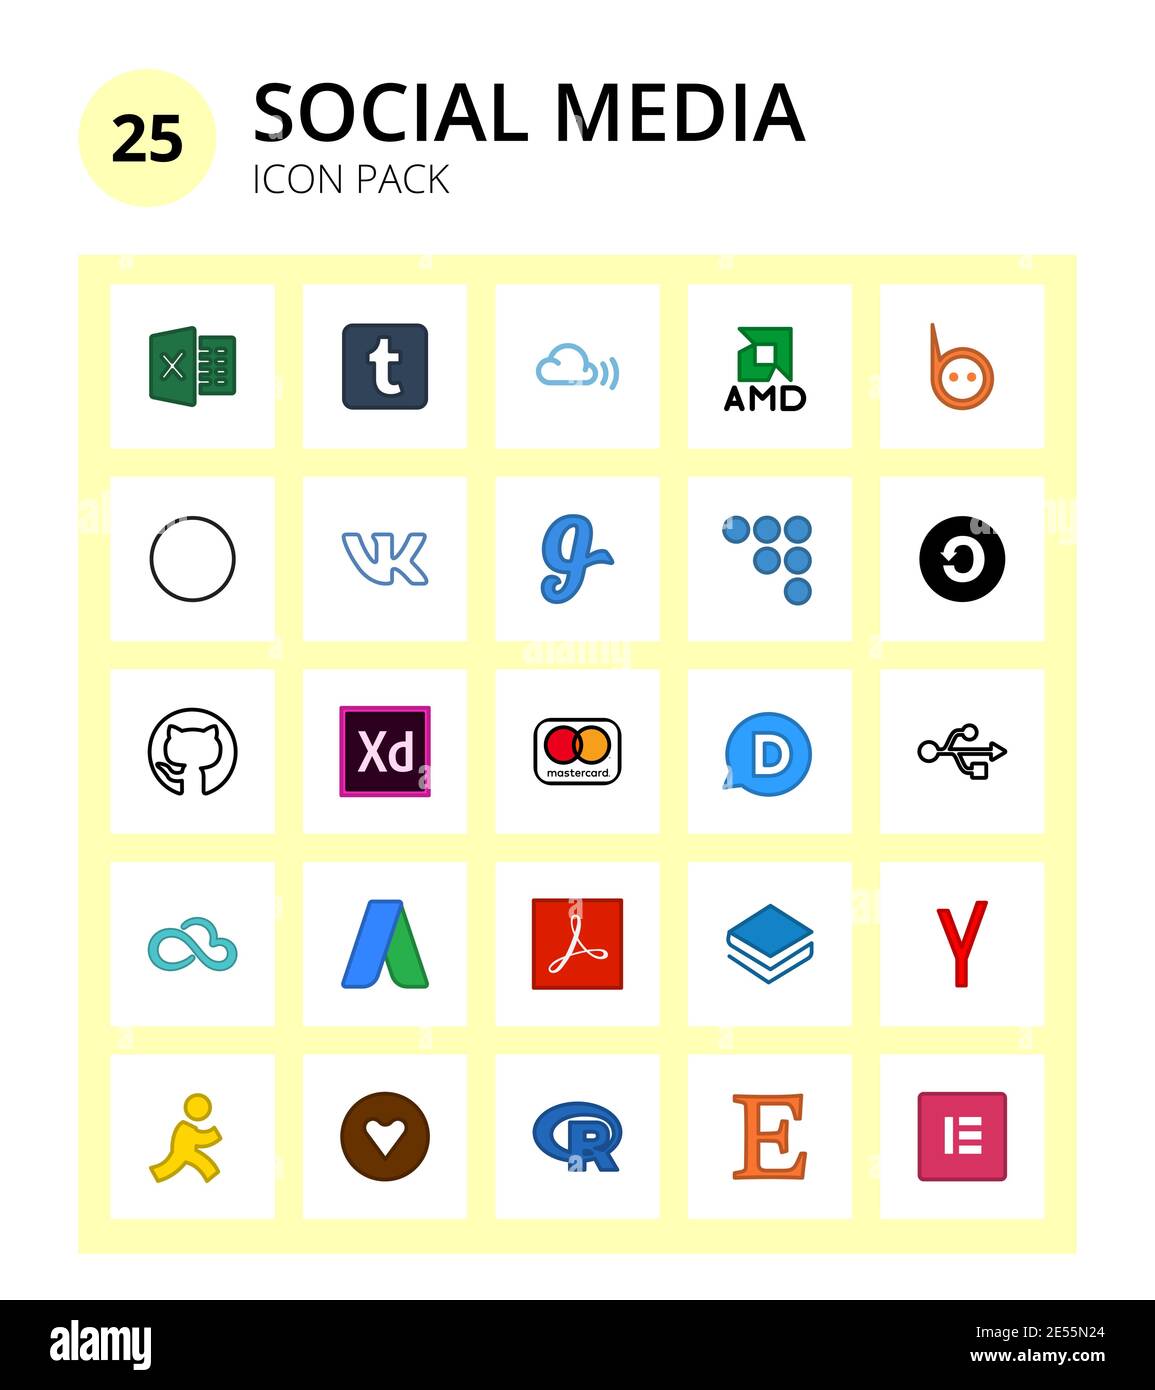 Social Media 25 Icons Excel, tumblr, Quadrat, mixcloud, amd editierbare Vektor Design Elemente Stock Vektor